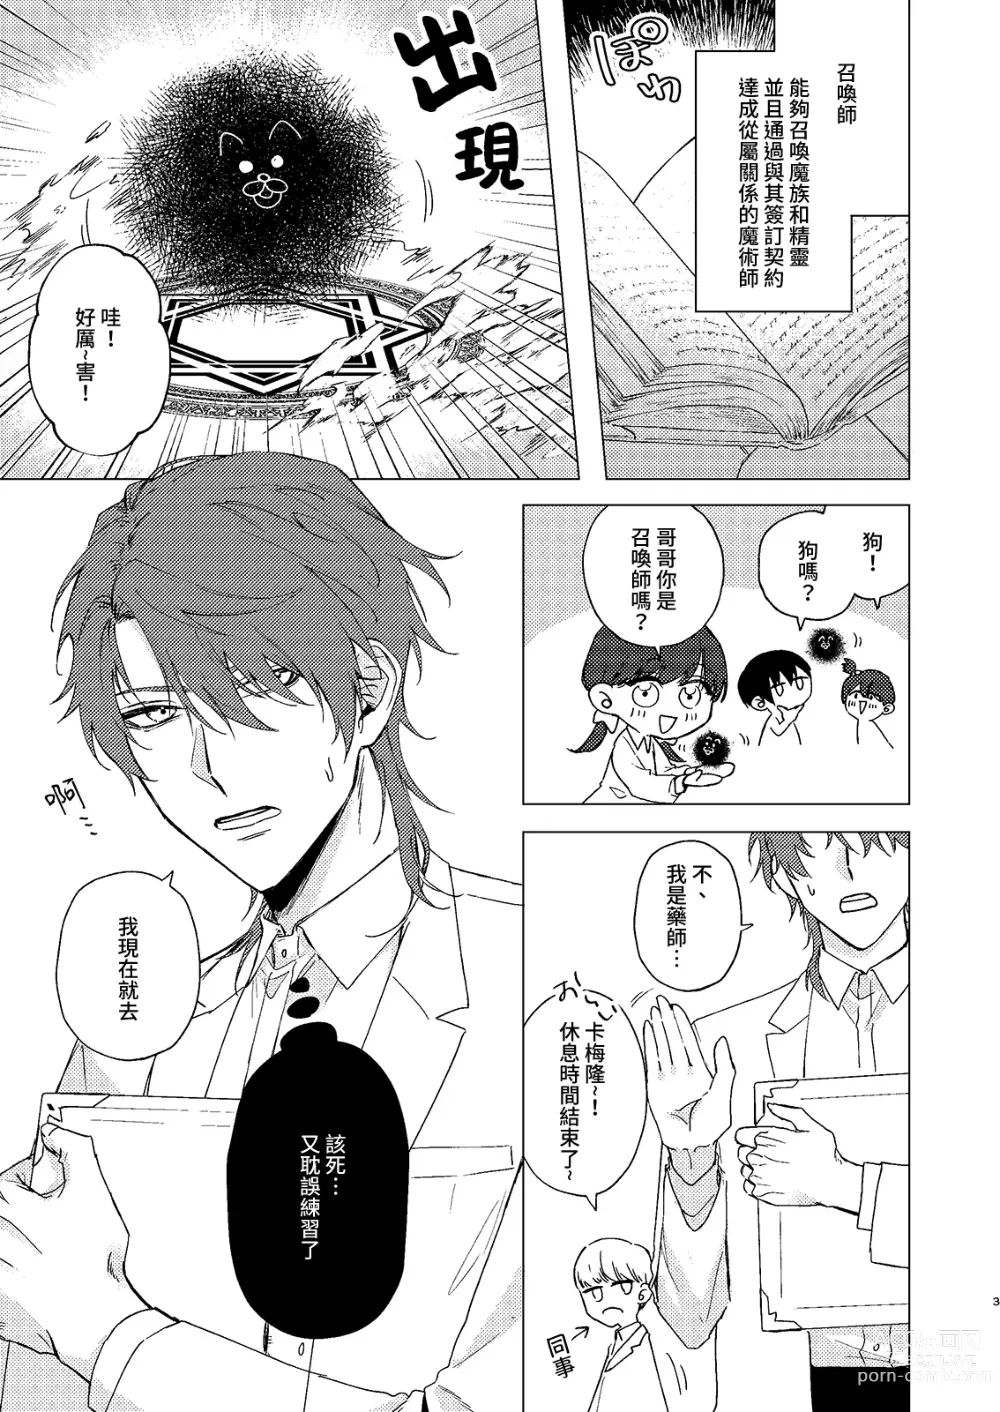 Page 2 of manga 多多调教我吧淫魔大人1